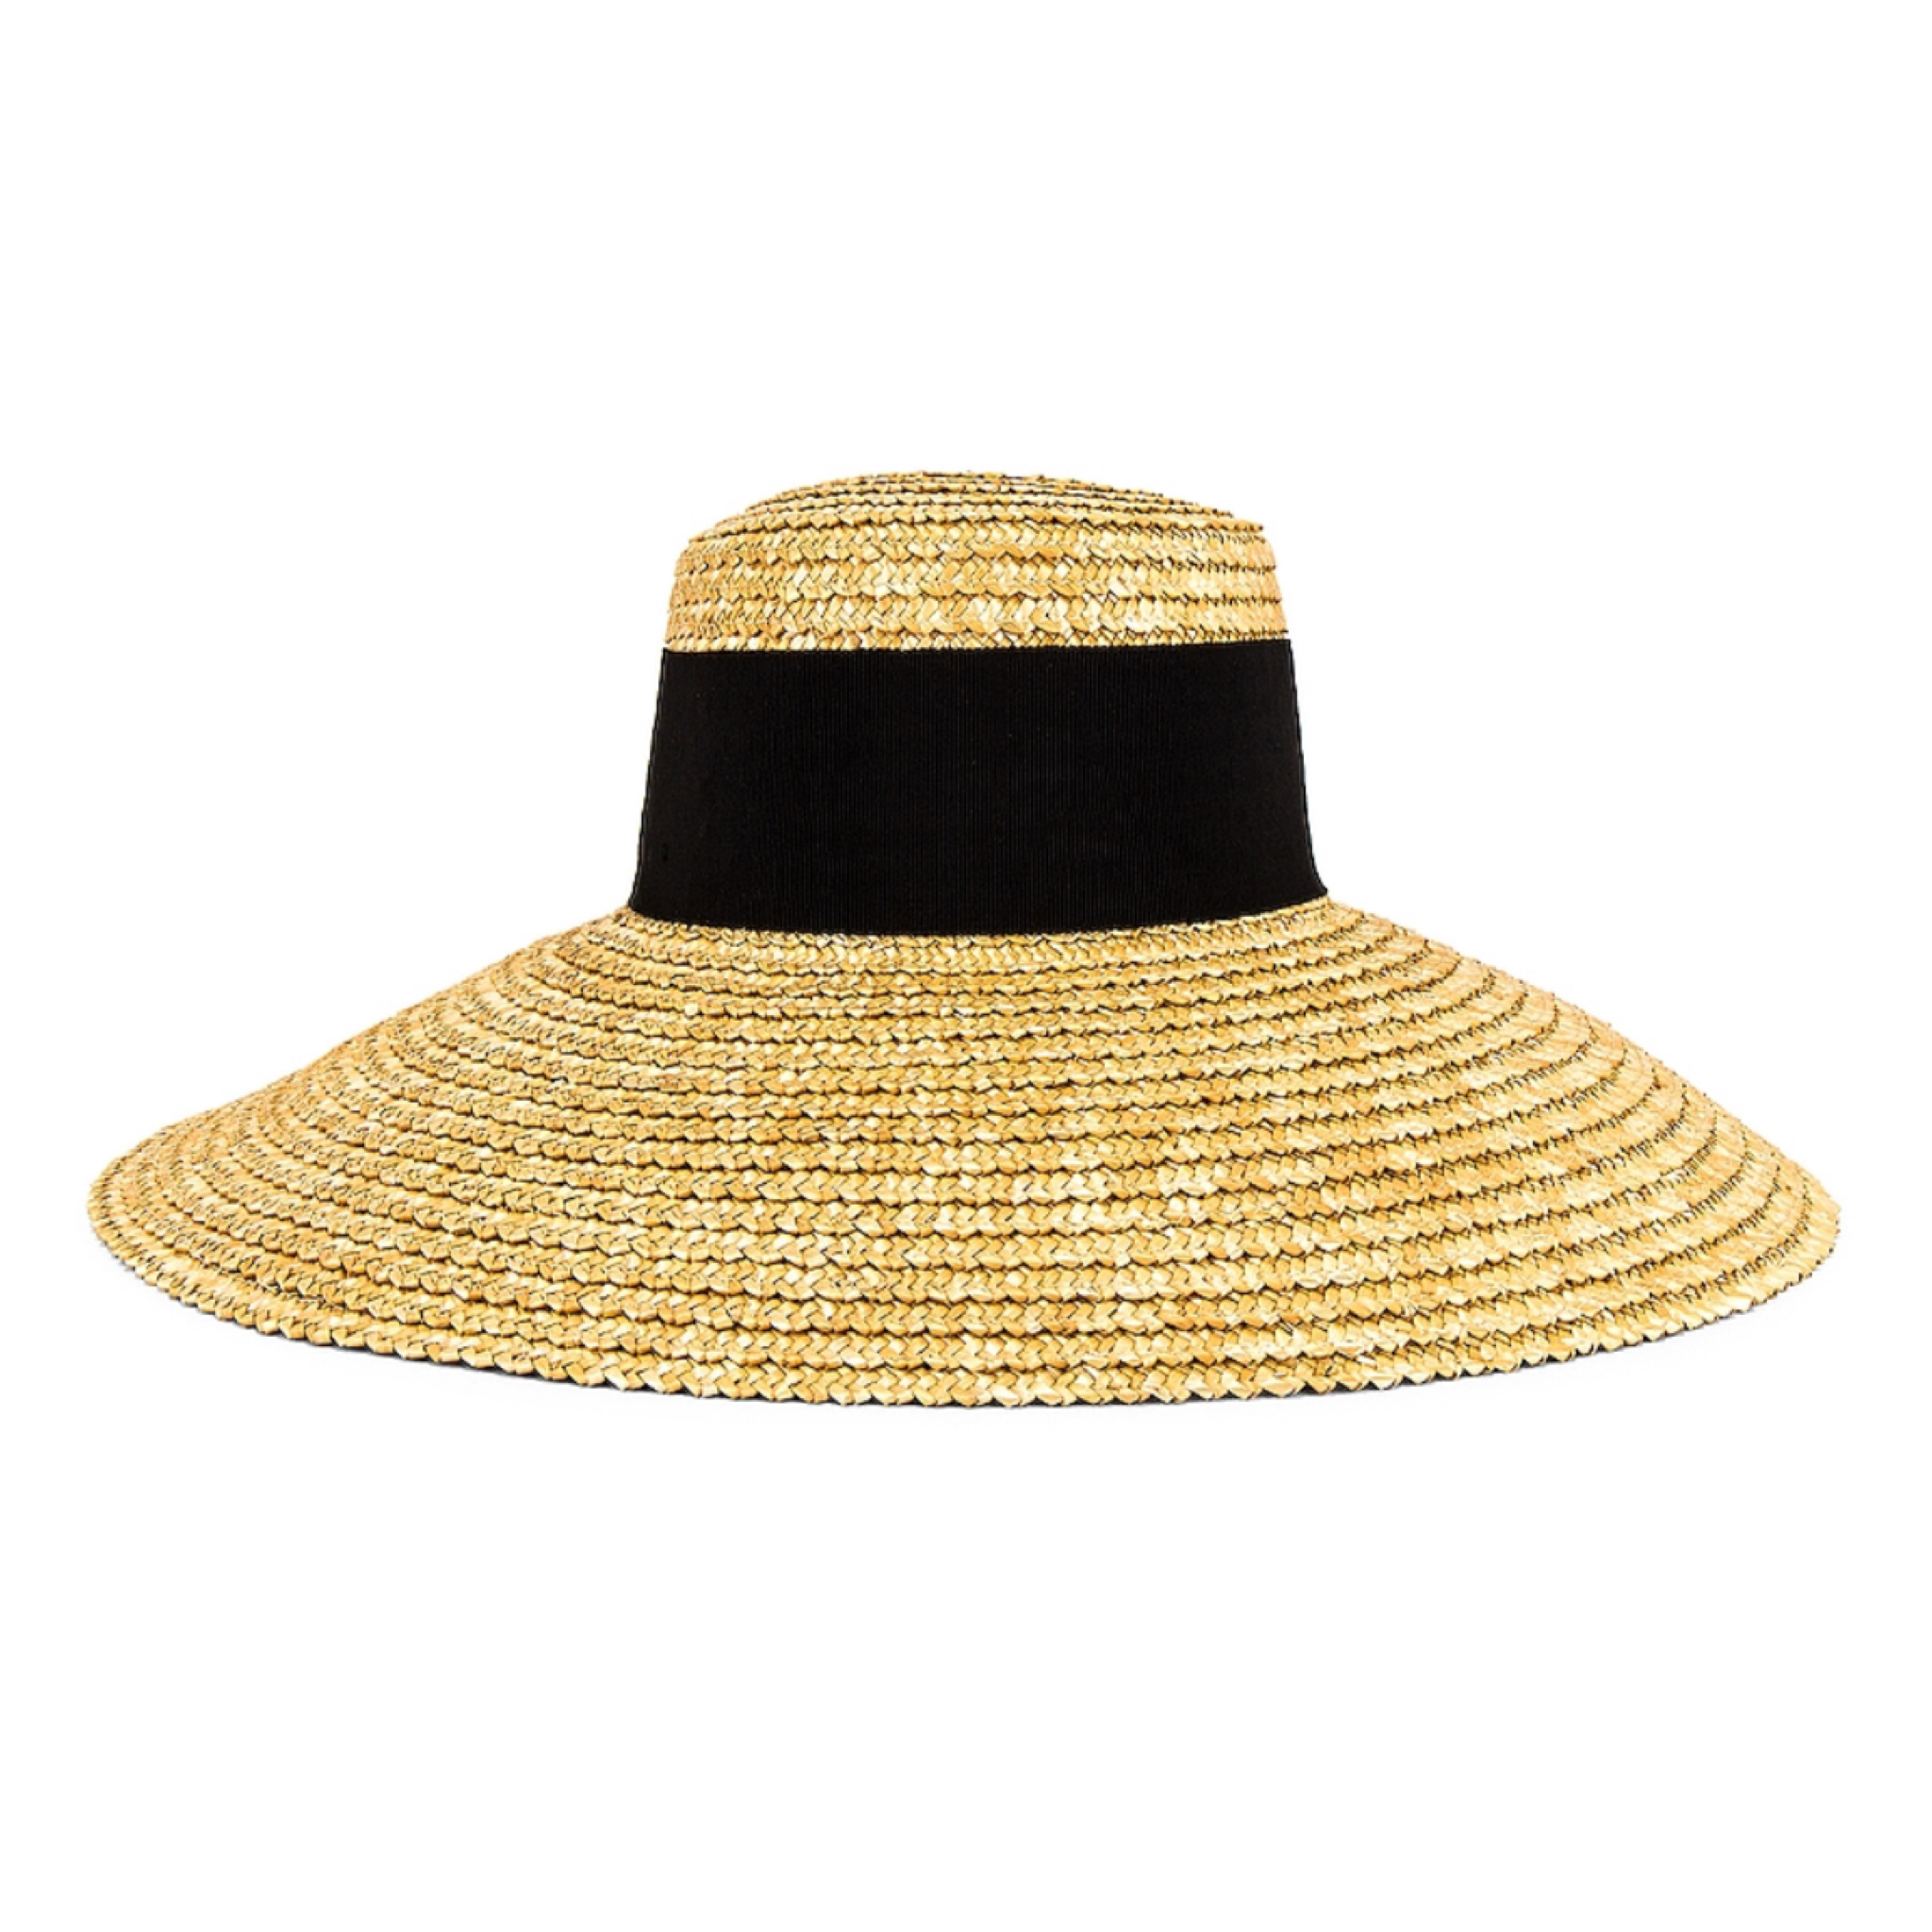 $614, Eugenia Kim Hat